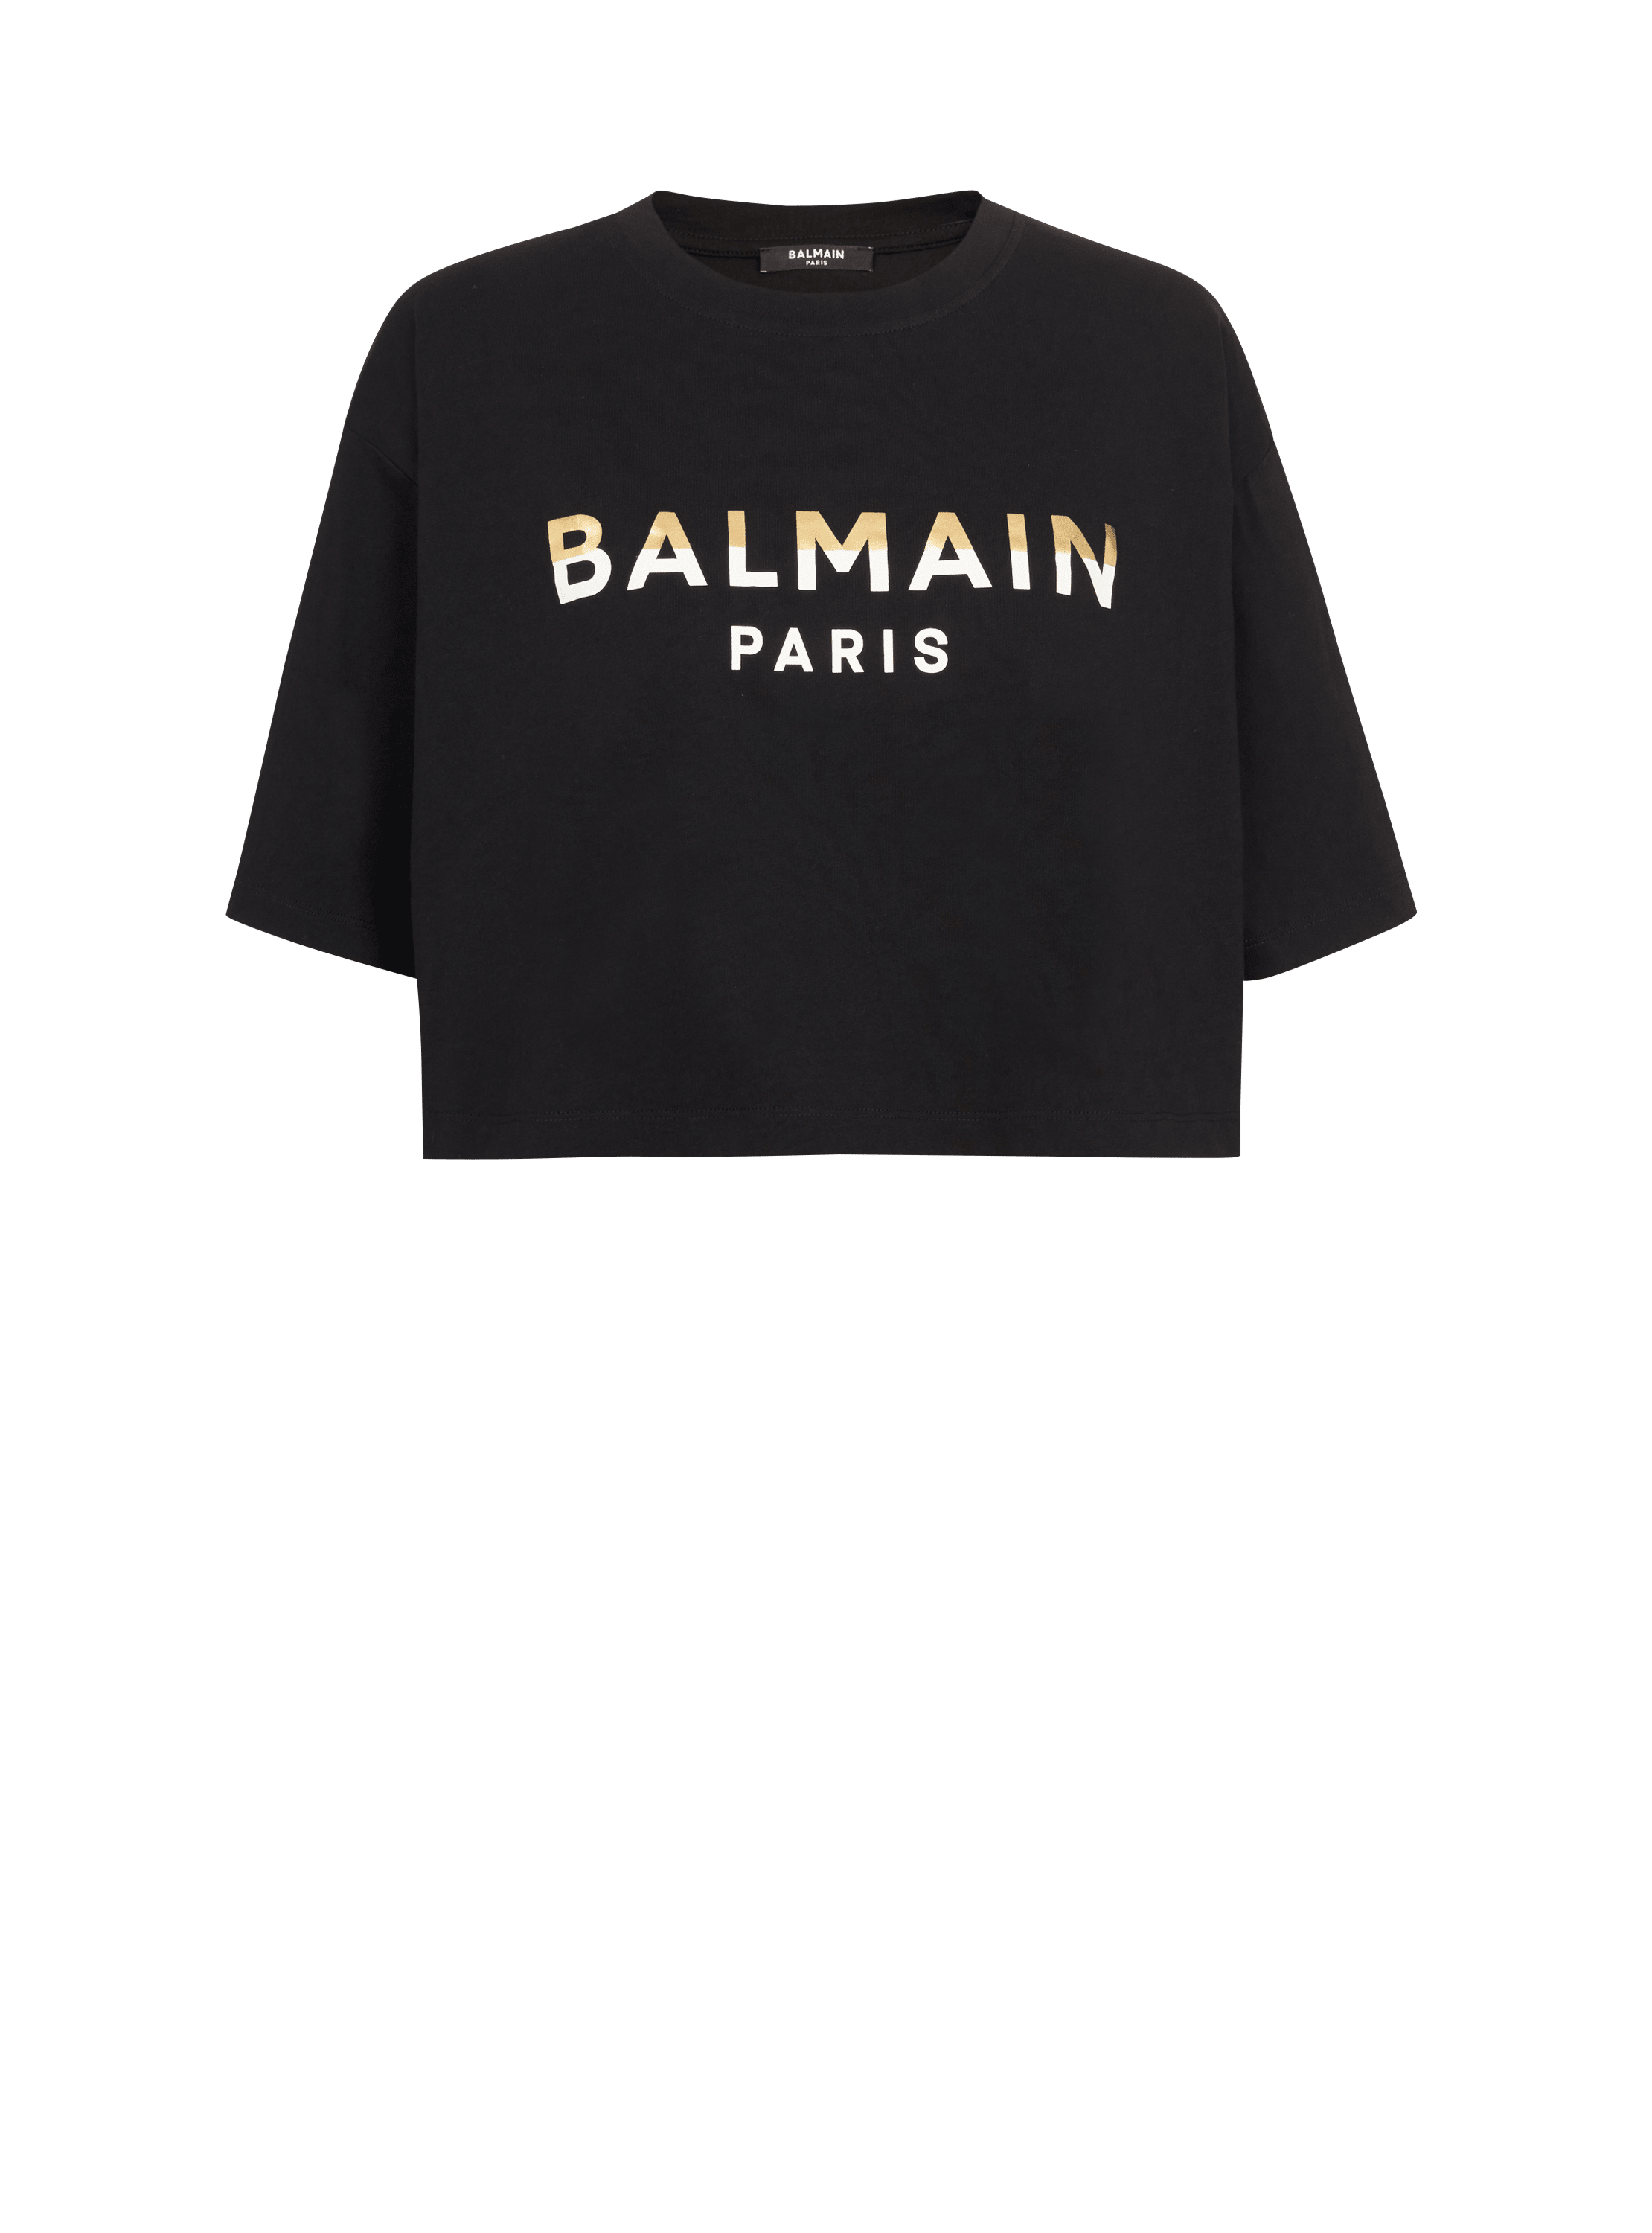 Cropped Balmain Paris T-shirt, black, hi-res